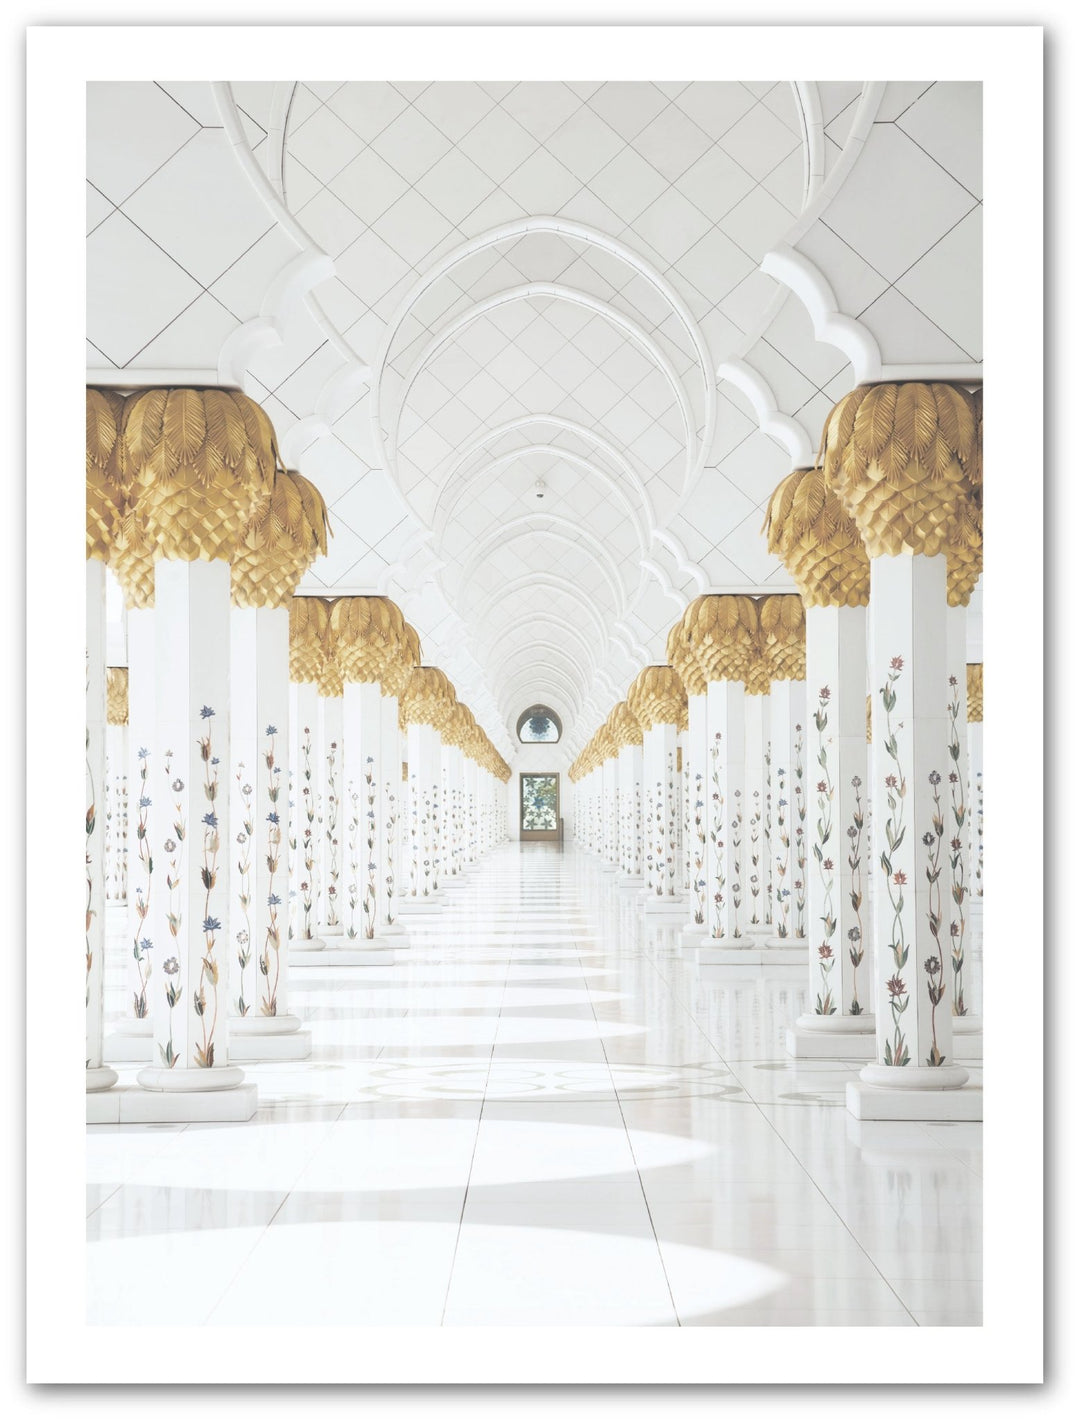 Grand Mosque Hallway - Beautiful Wall